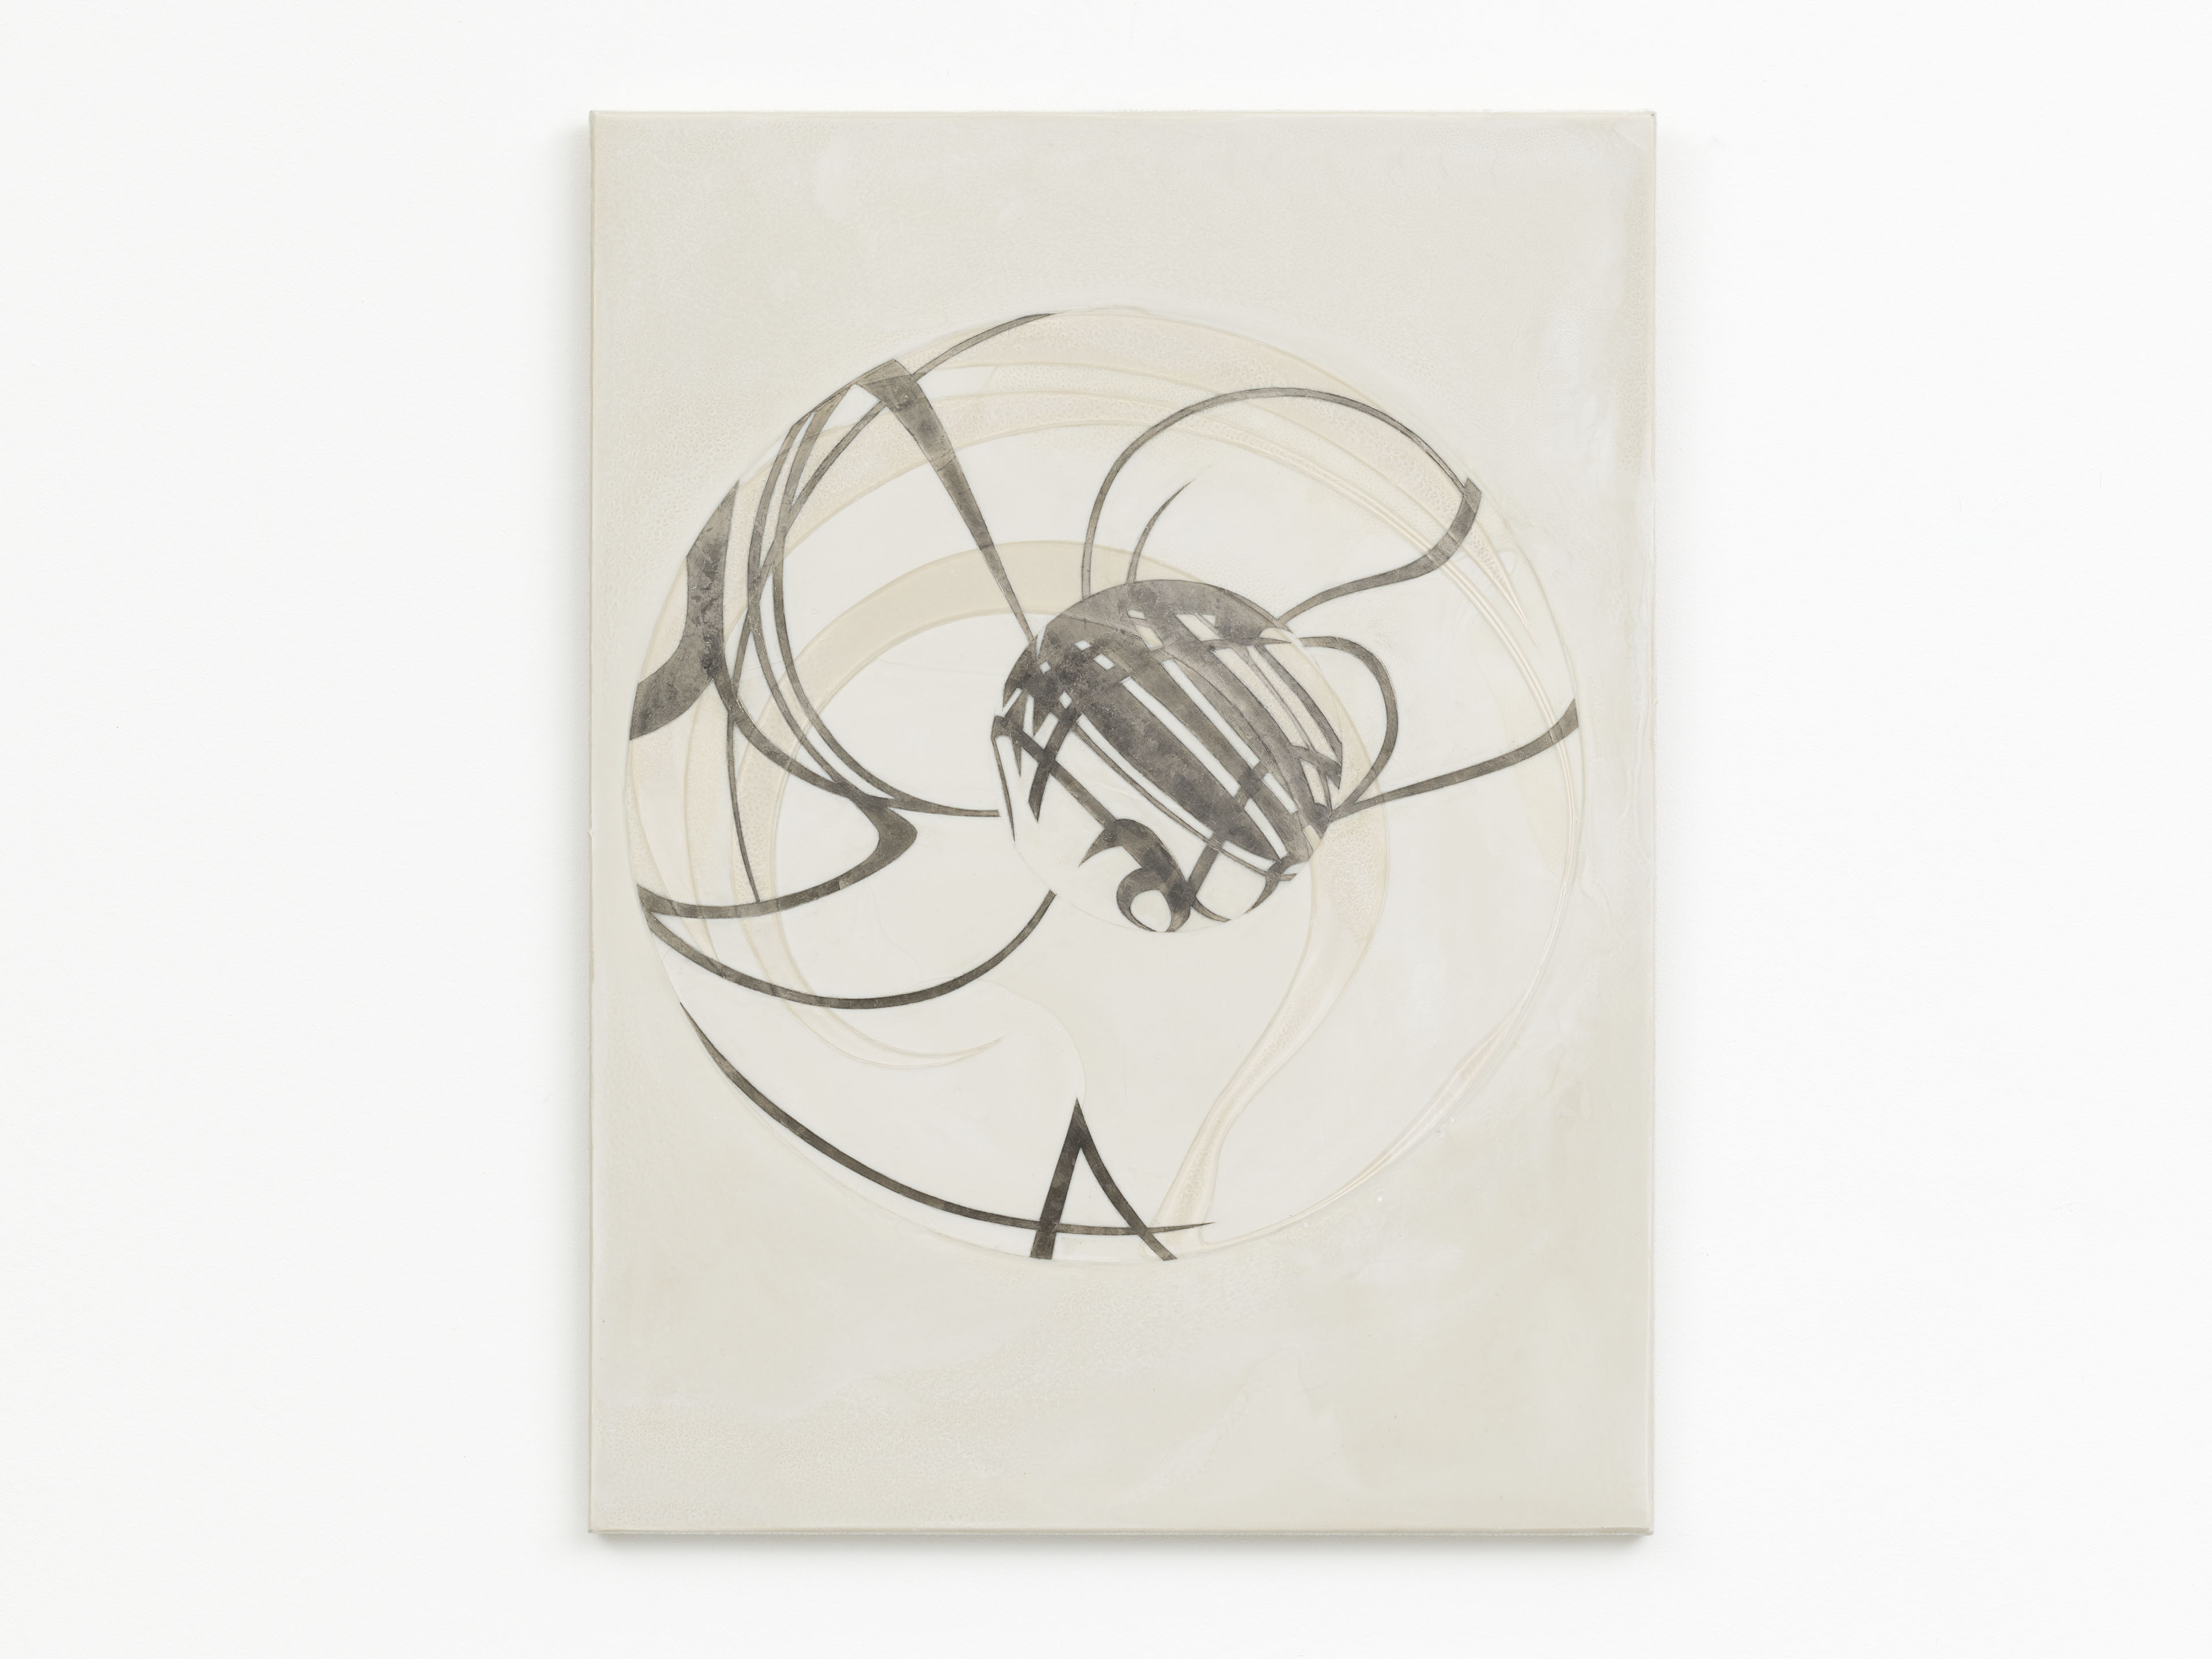 Domenico Bianchi, Untitled, 2009, wax and palladium-leaf on linen on fiberboard, 80 x 60 cm